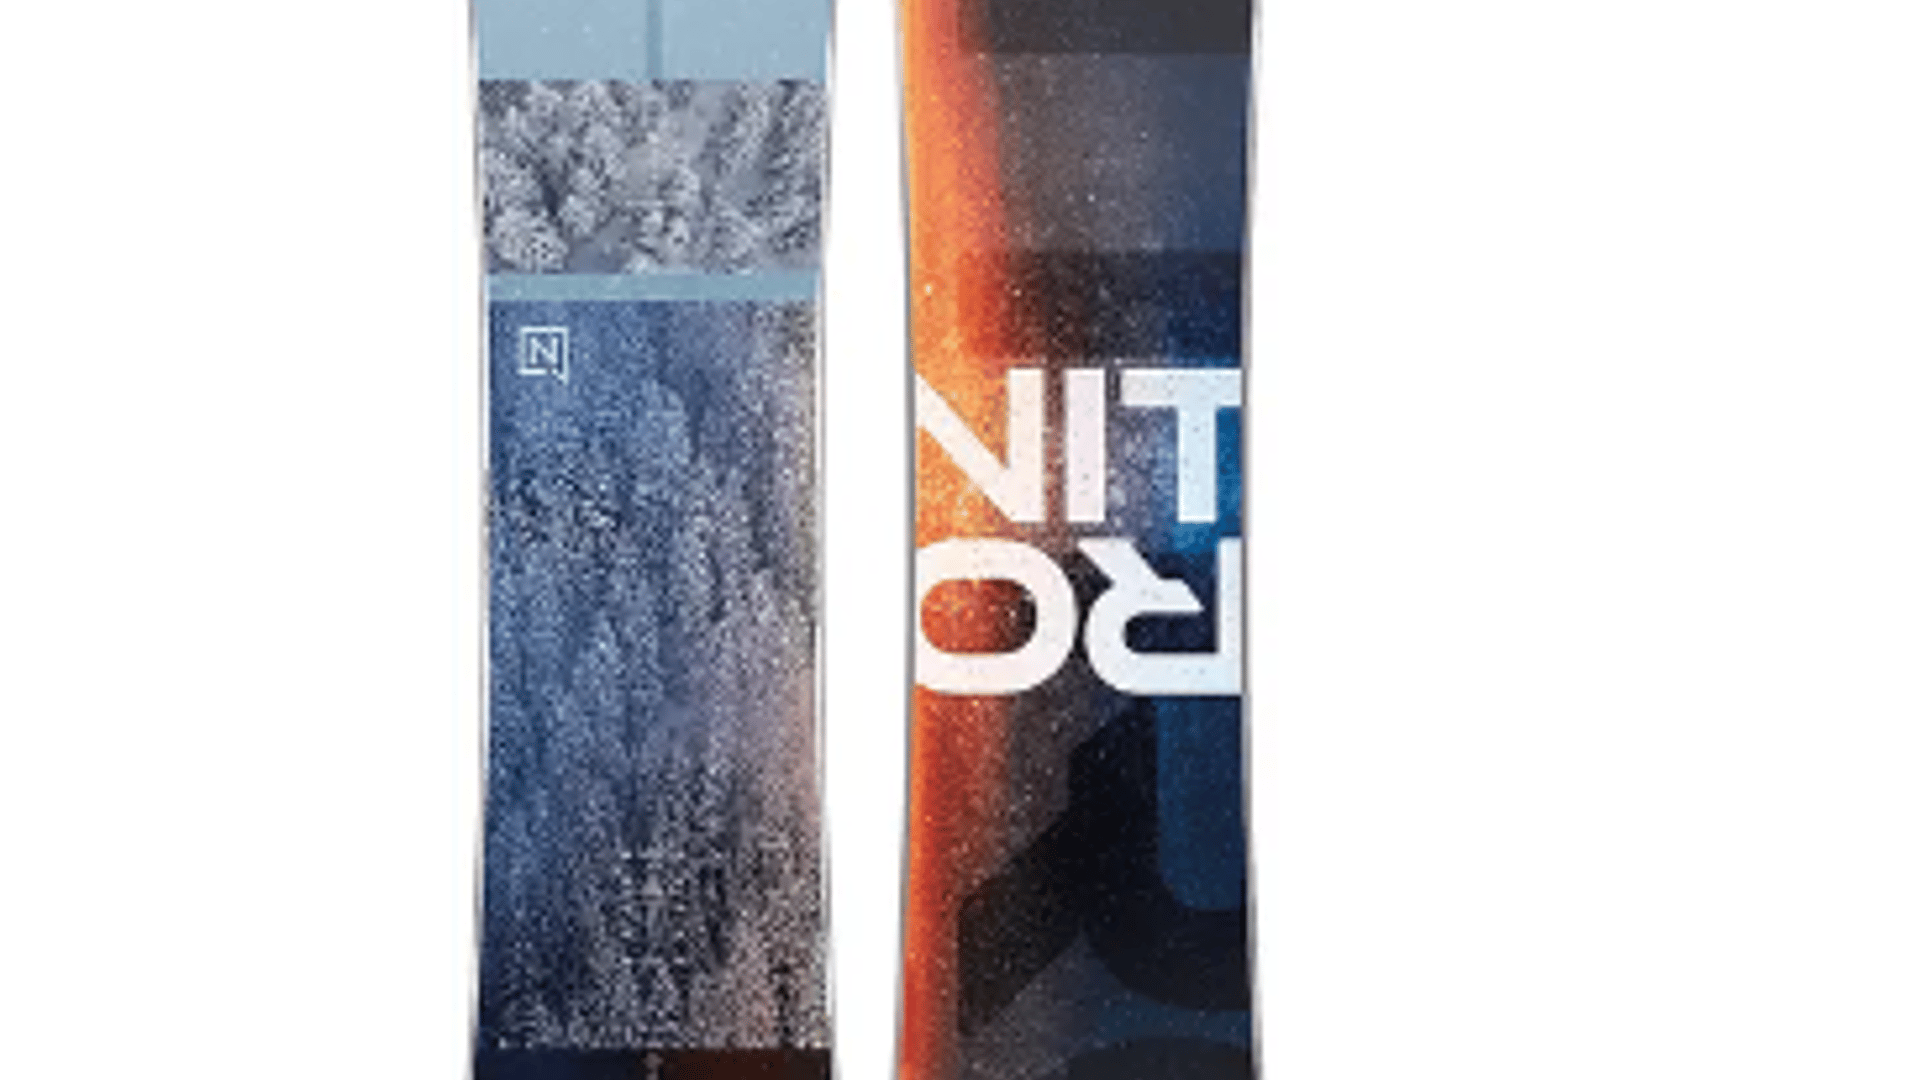 Snowboard: Nitro Prime View 152cm